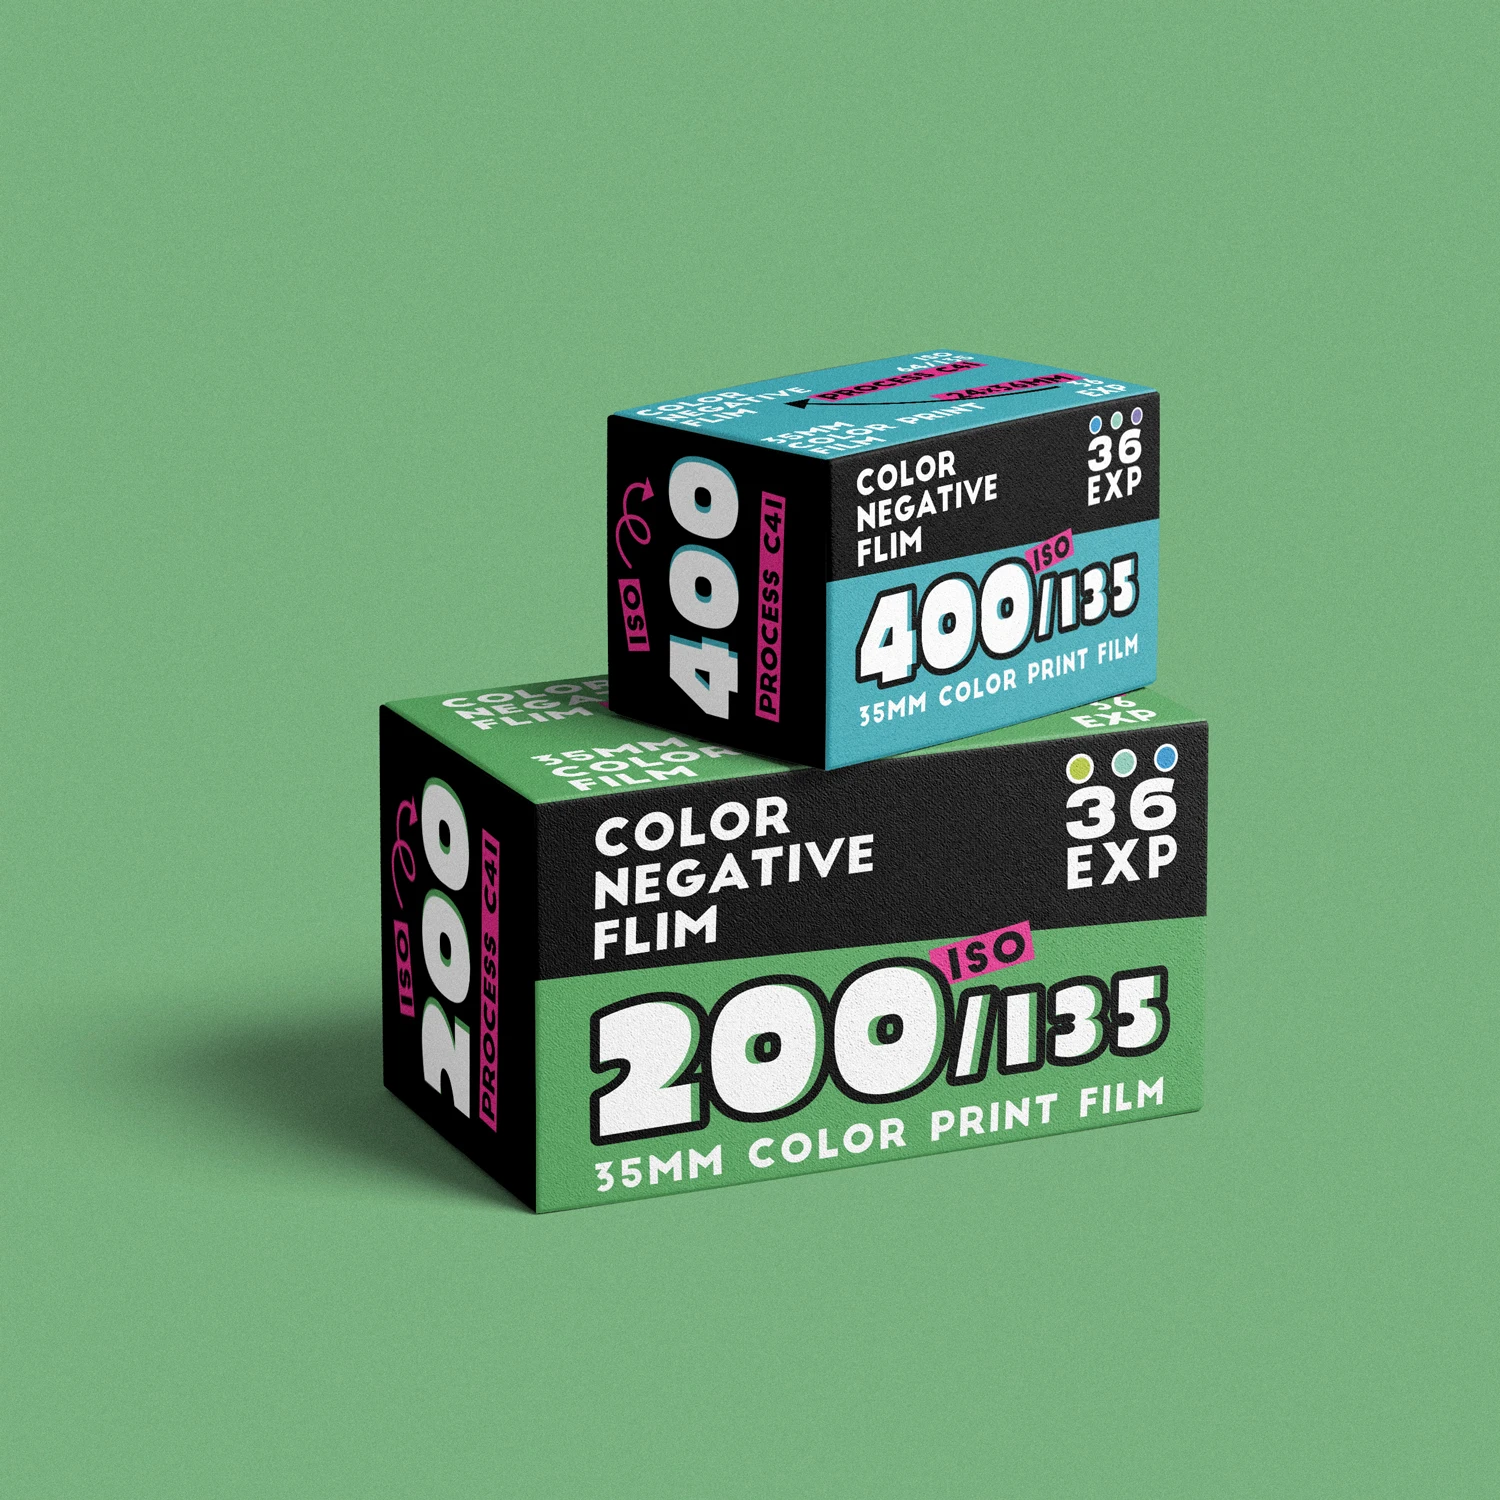 Цветная пленка 35 мм в рулонах, одноразовая пленка для фотоаппарата, отрицательная пленка 400 ISO 36 exp, технологическая фотопленка для фотоаппарата Fuji Fujifilm Kodak